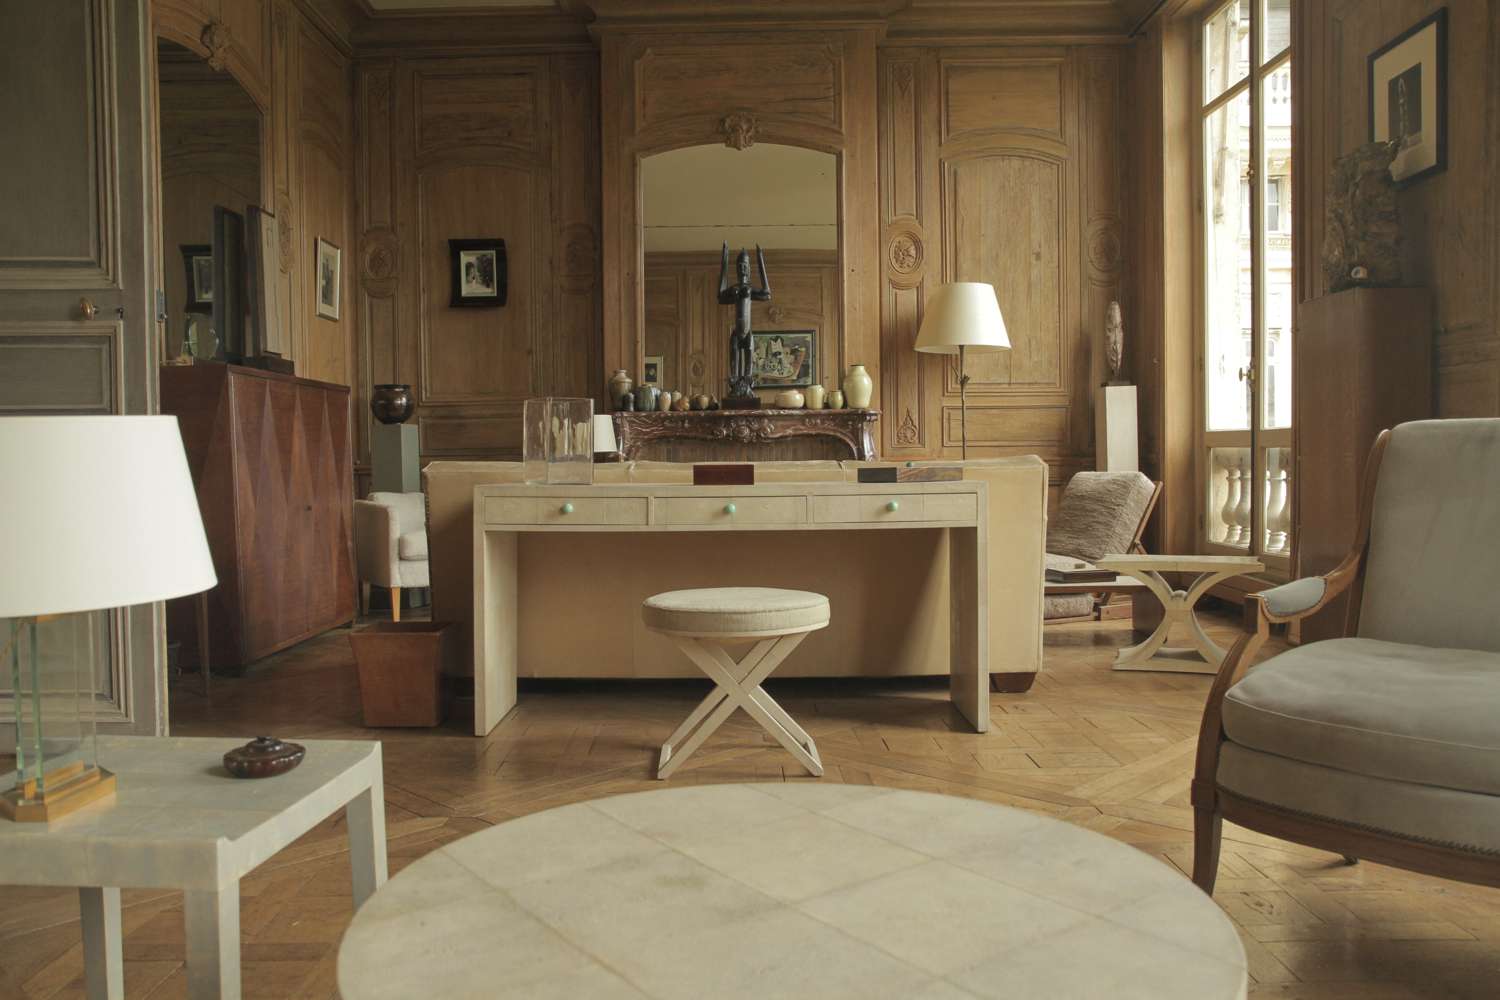 Jean-Michel Frank designed room